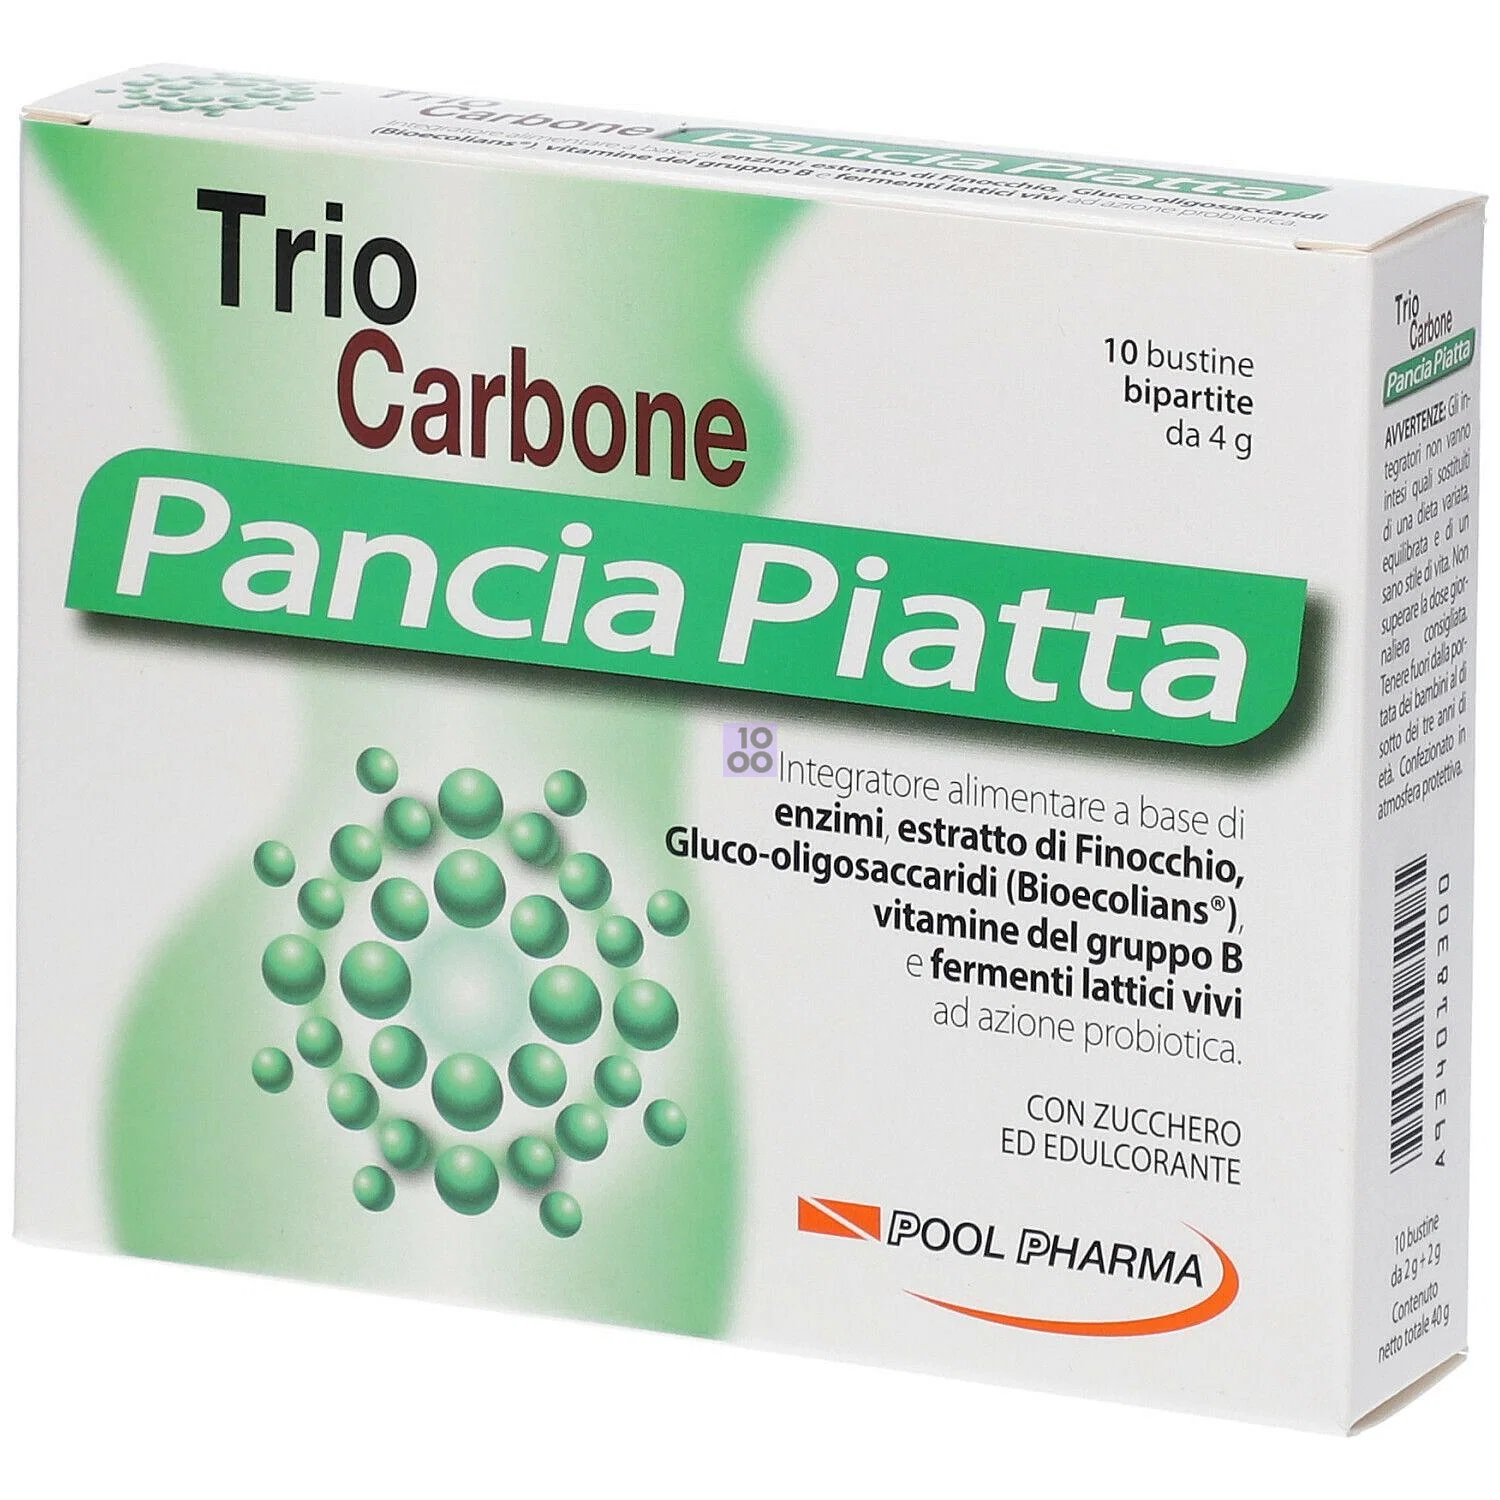 TRIOCARBONE PANCIA PIA 10+10 BUST